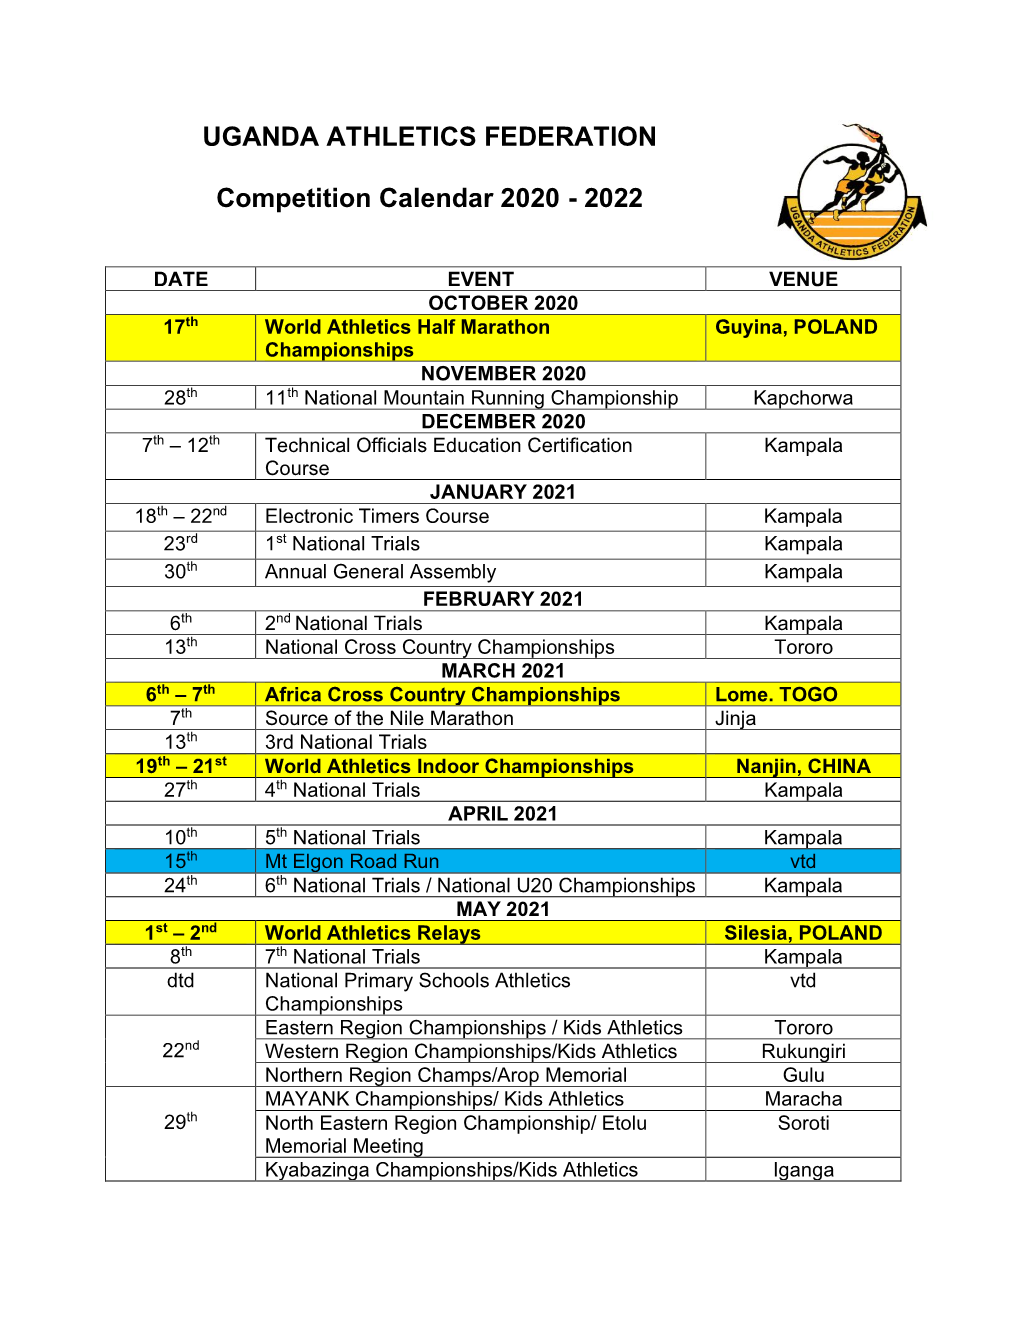 UGANDA ATHLETICS FEDERATION Competition Calendar 2020